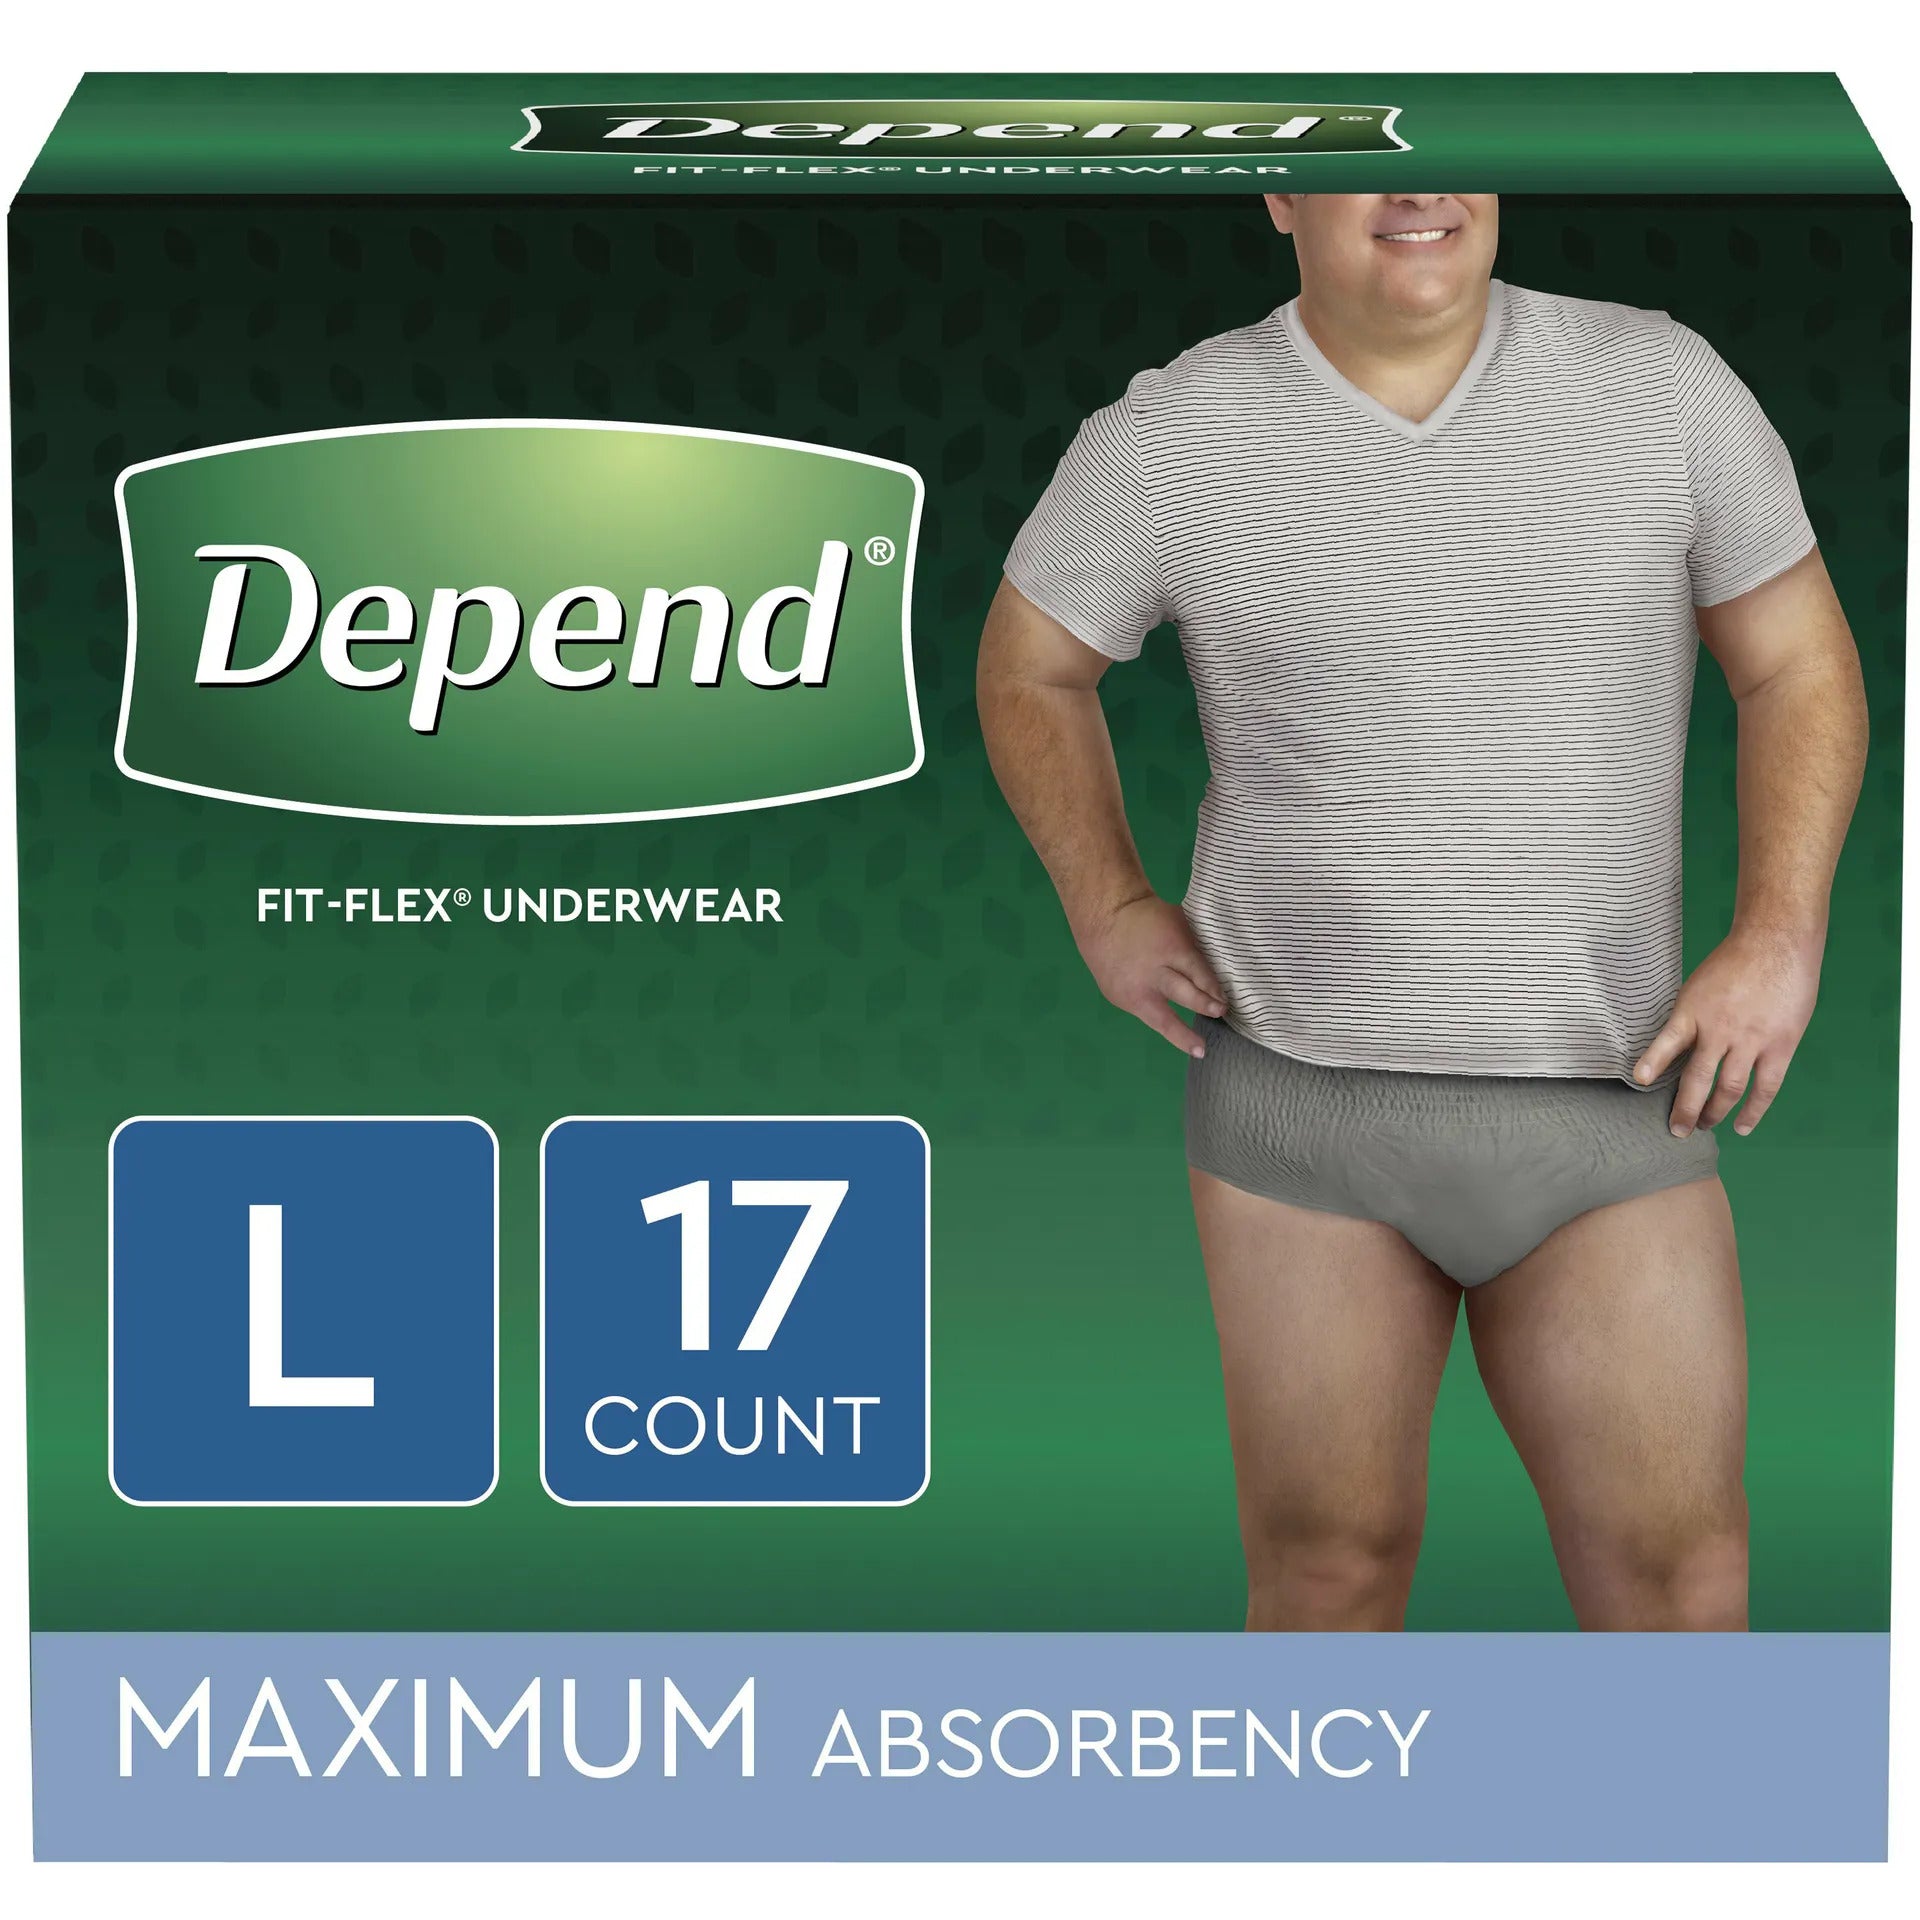 Incontinence Pants, For Women, 0.9 fl oz (25 cc), Underwear